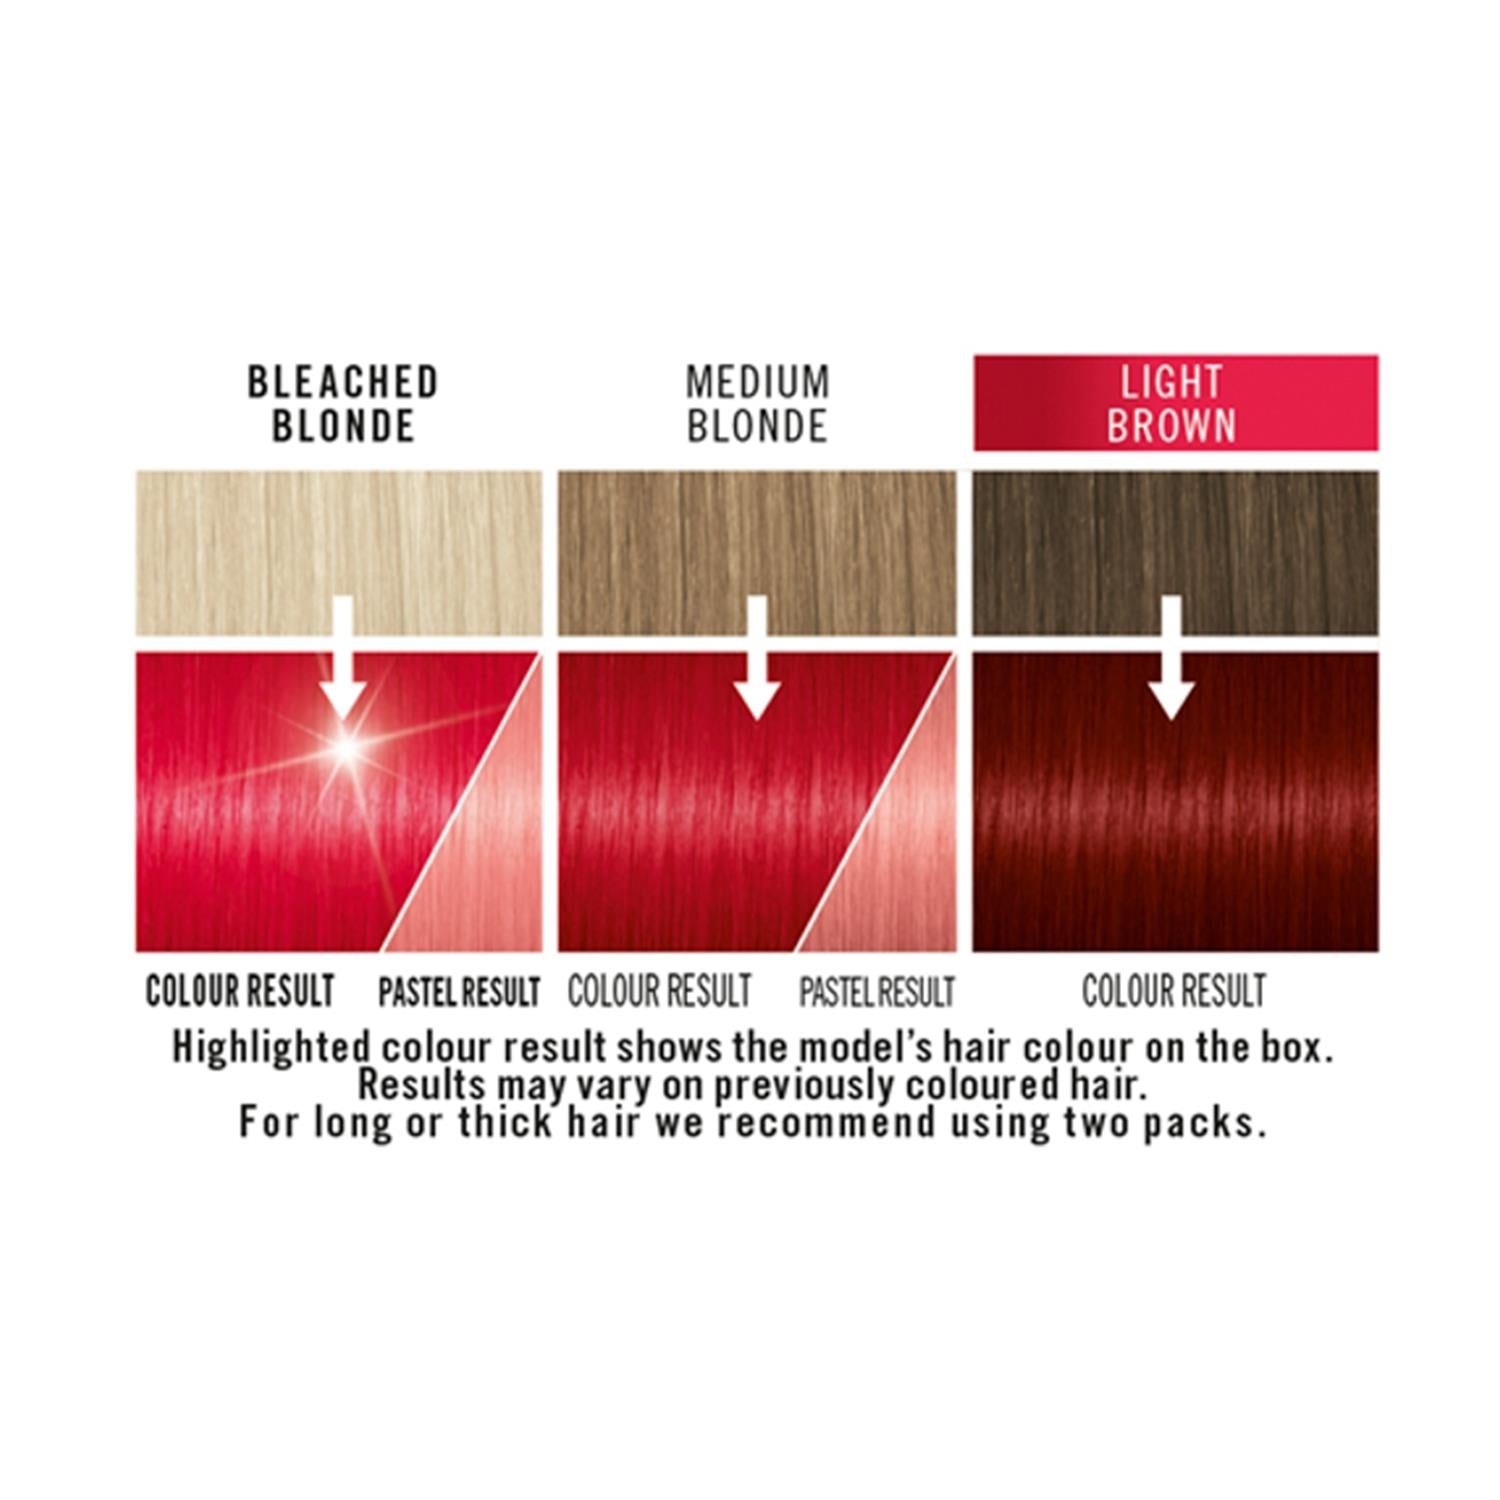 Schwarzkopf Ultra Bright or Pastel Semi Permanent Hair Dye, 092 Pillar Box Red